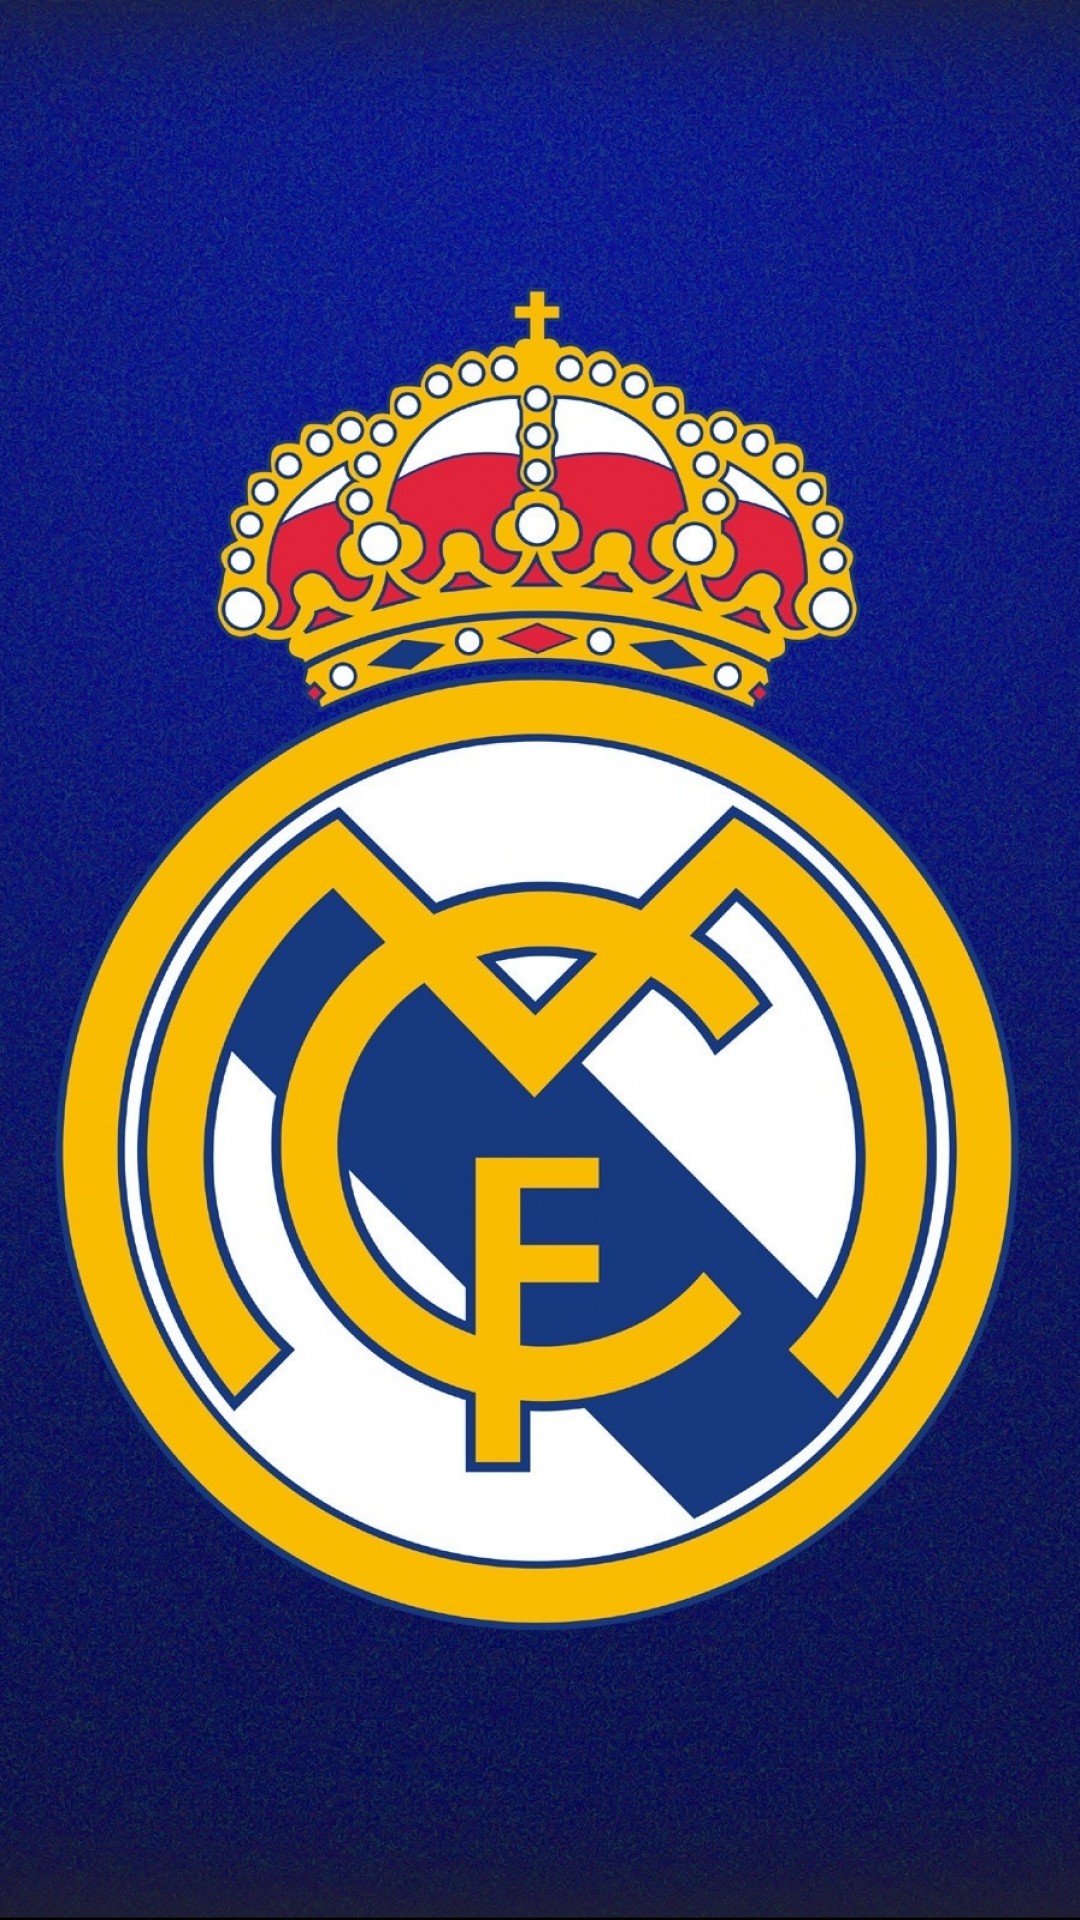 Real Madrid ticket